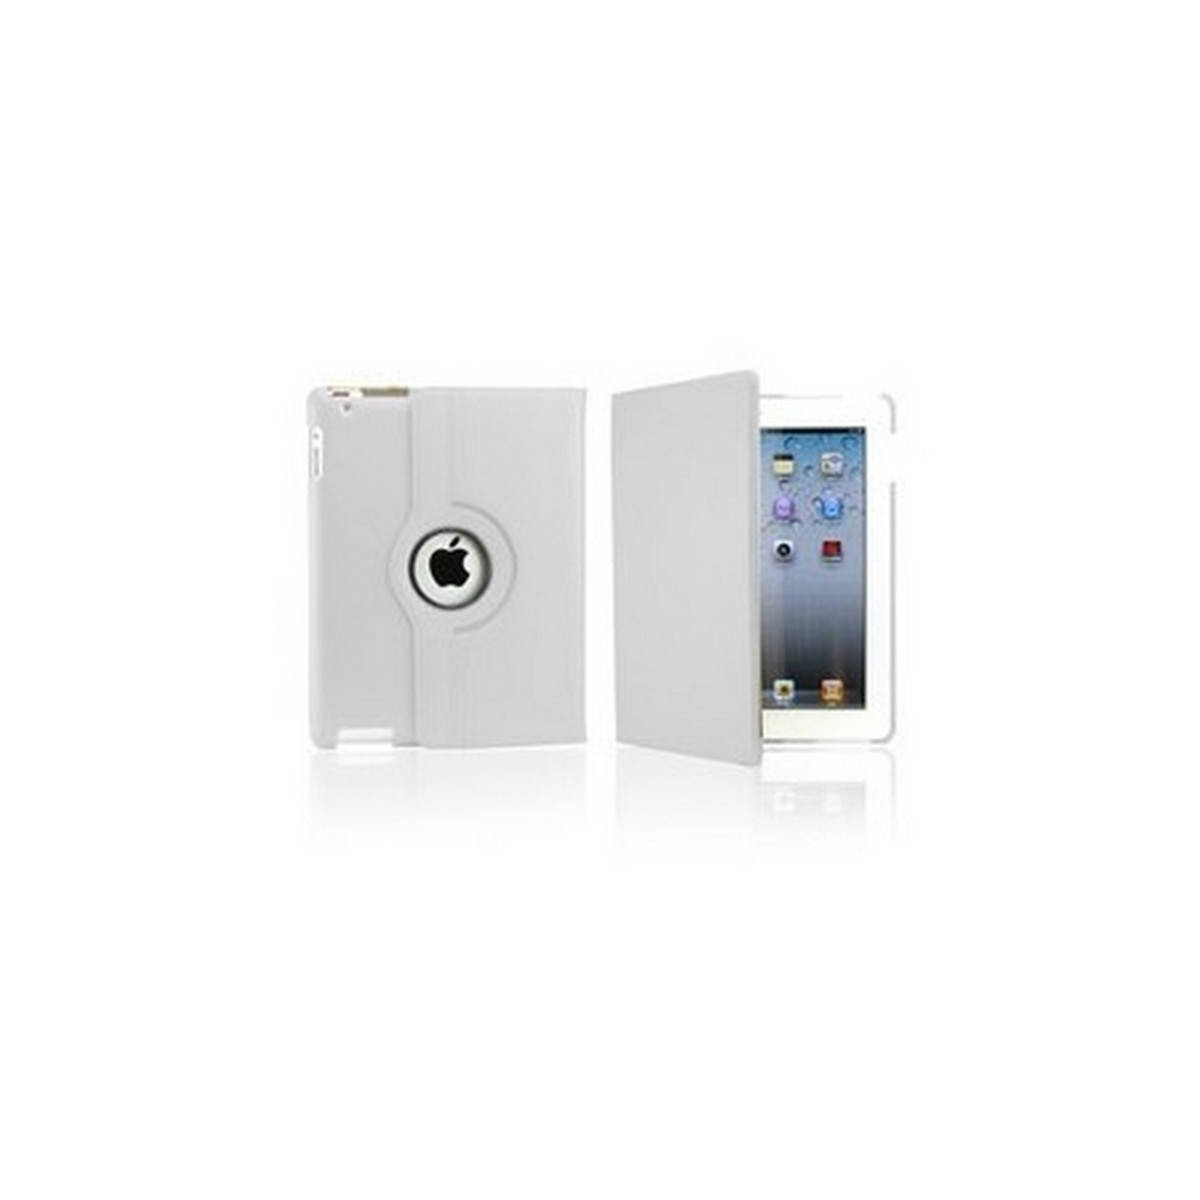 Funda Giratoria 360º iPad 3 iPad 4 iPad 2 blanca